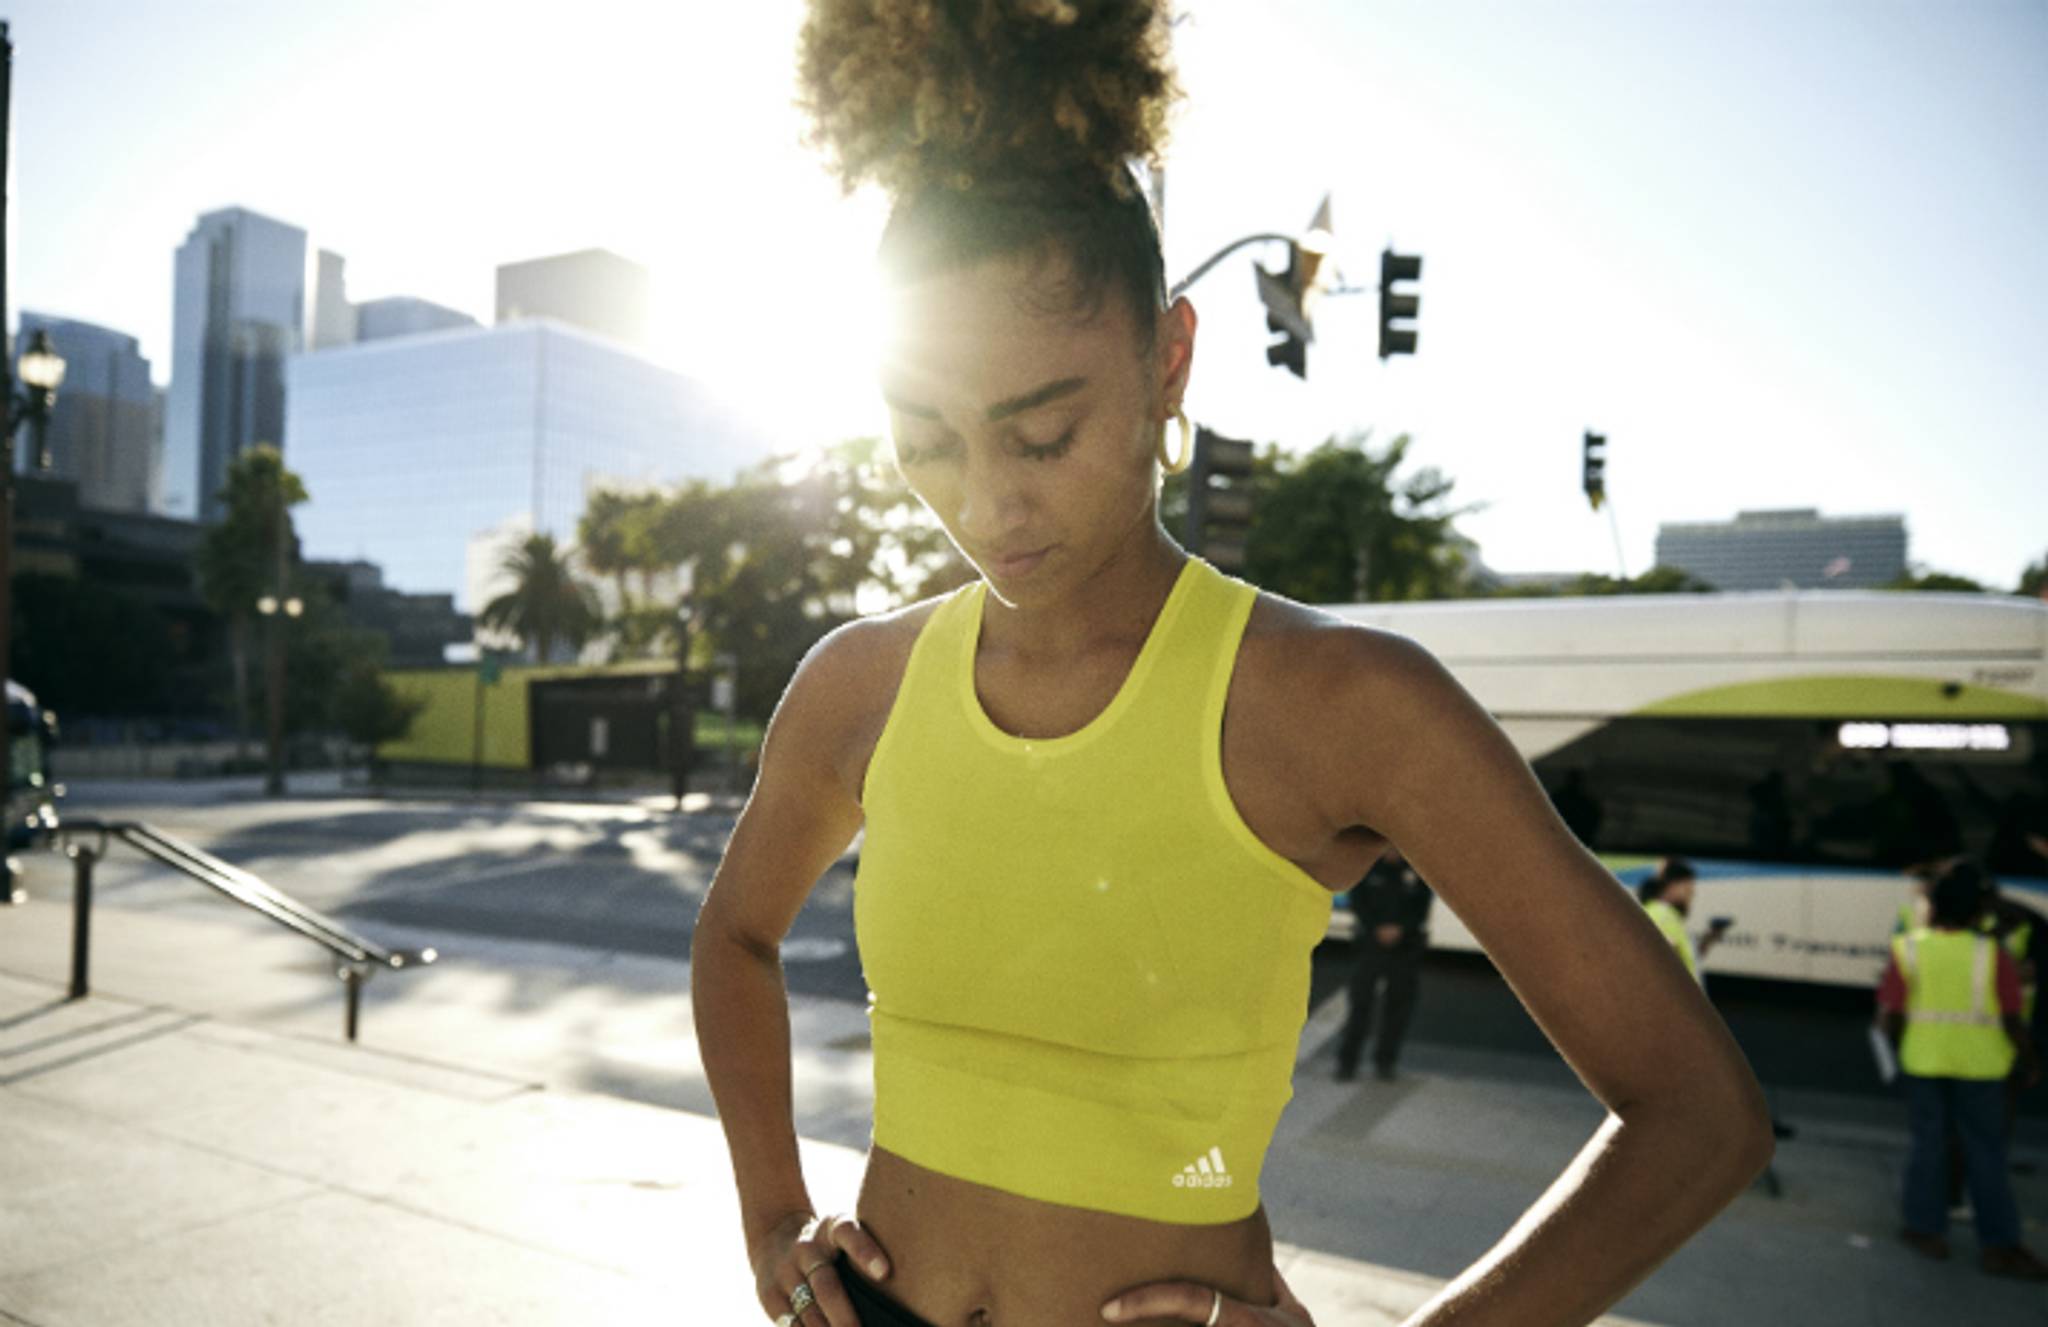 Adidas ad reframes running as a mental health aid